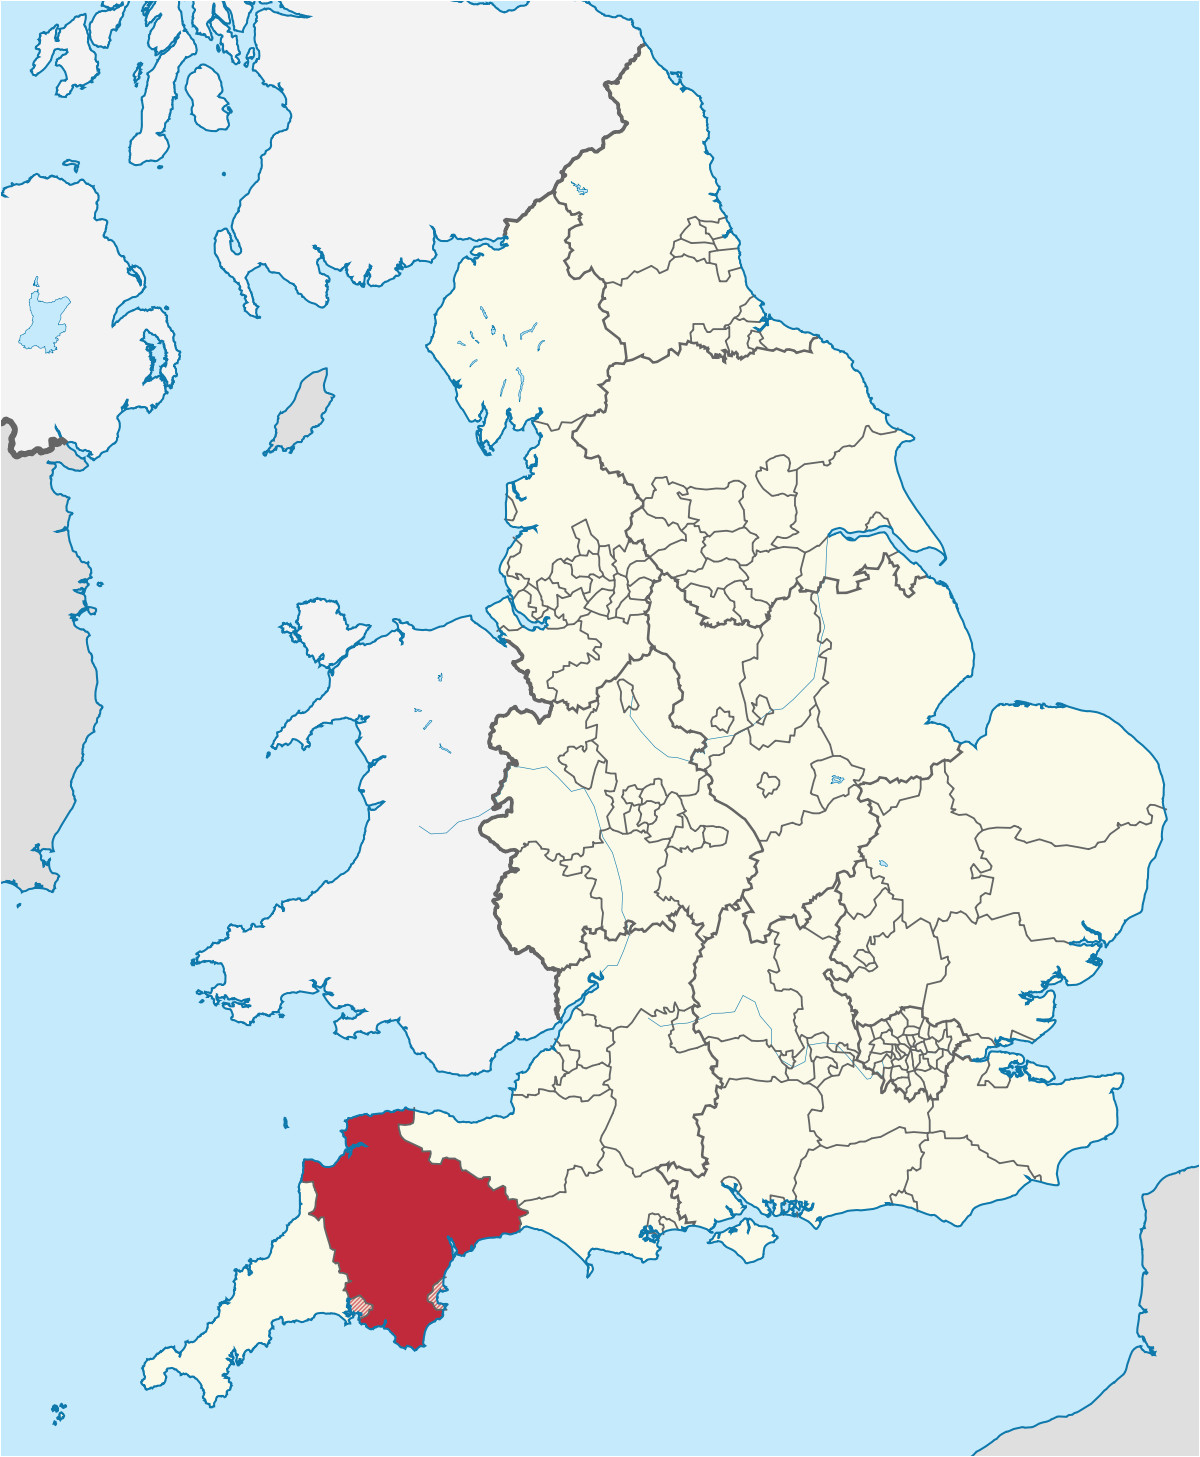 Where is southampton England On Map Devon England Wikipedia